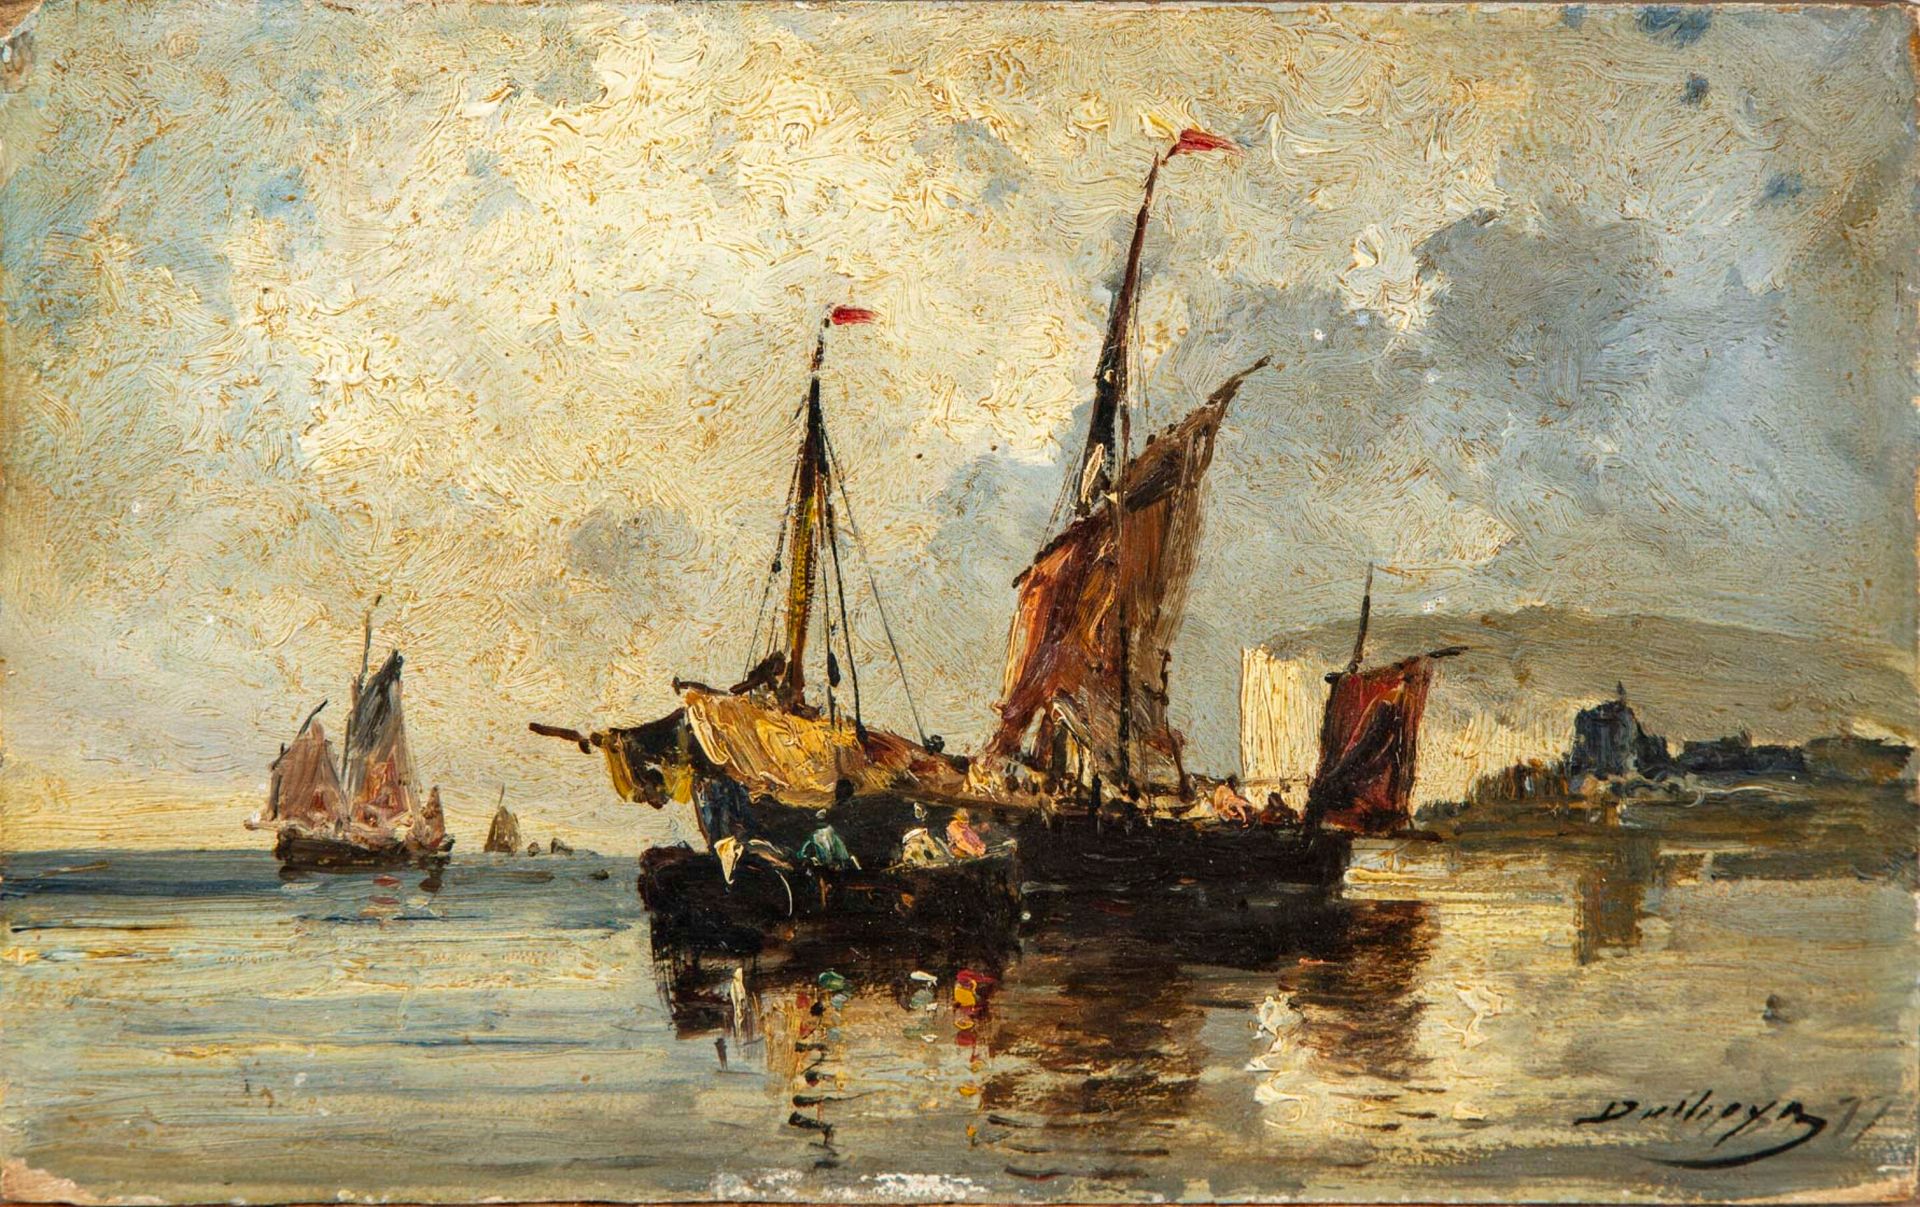 DESHAYES 查尔斯-费利克斯-爱德华-戴夏耶(1830-1895)

悬崖附近的船只

面板油画，右下角有签名和日期77

15,5 x 24 cm

无&hellip;